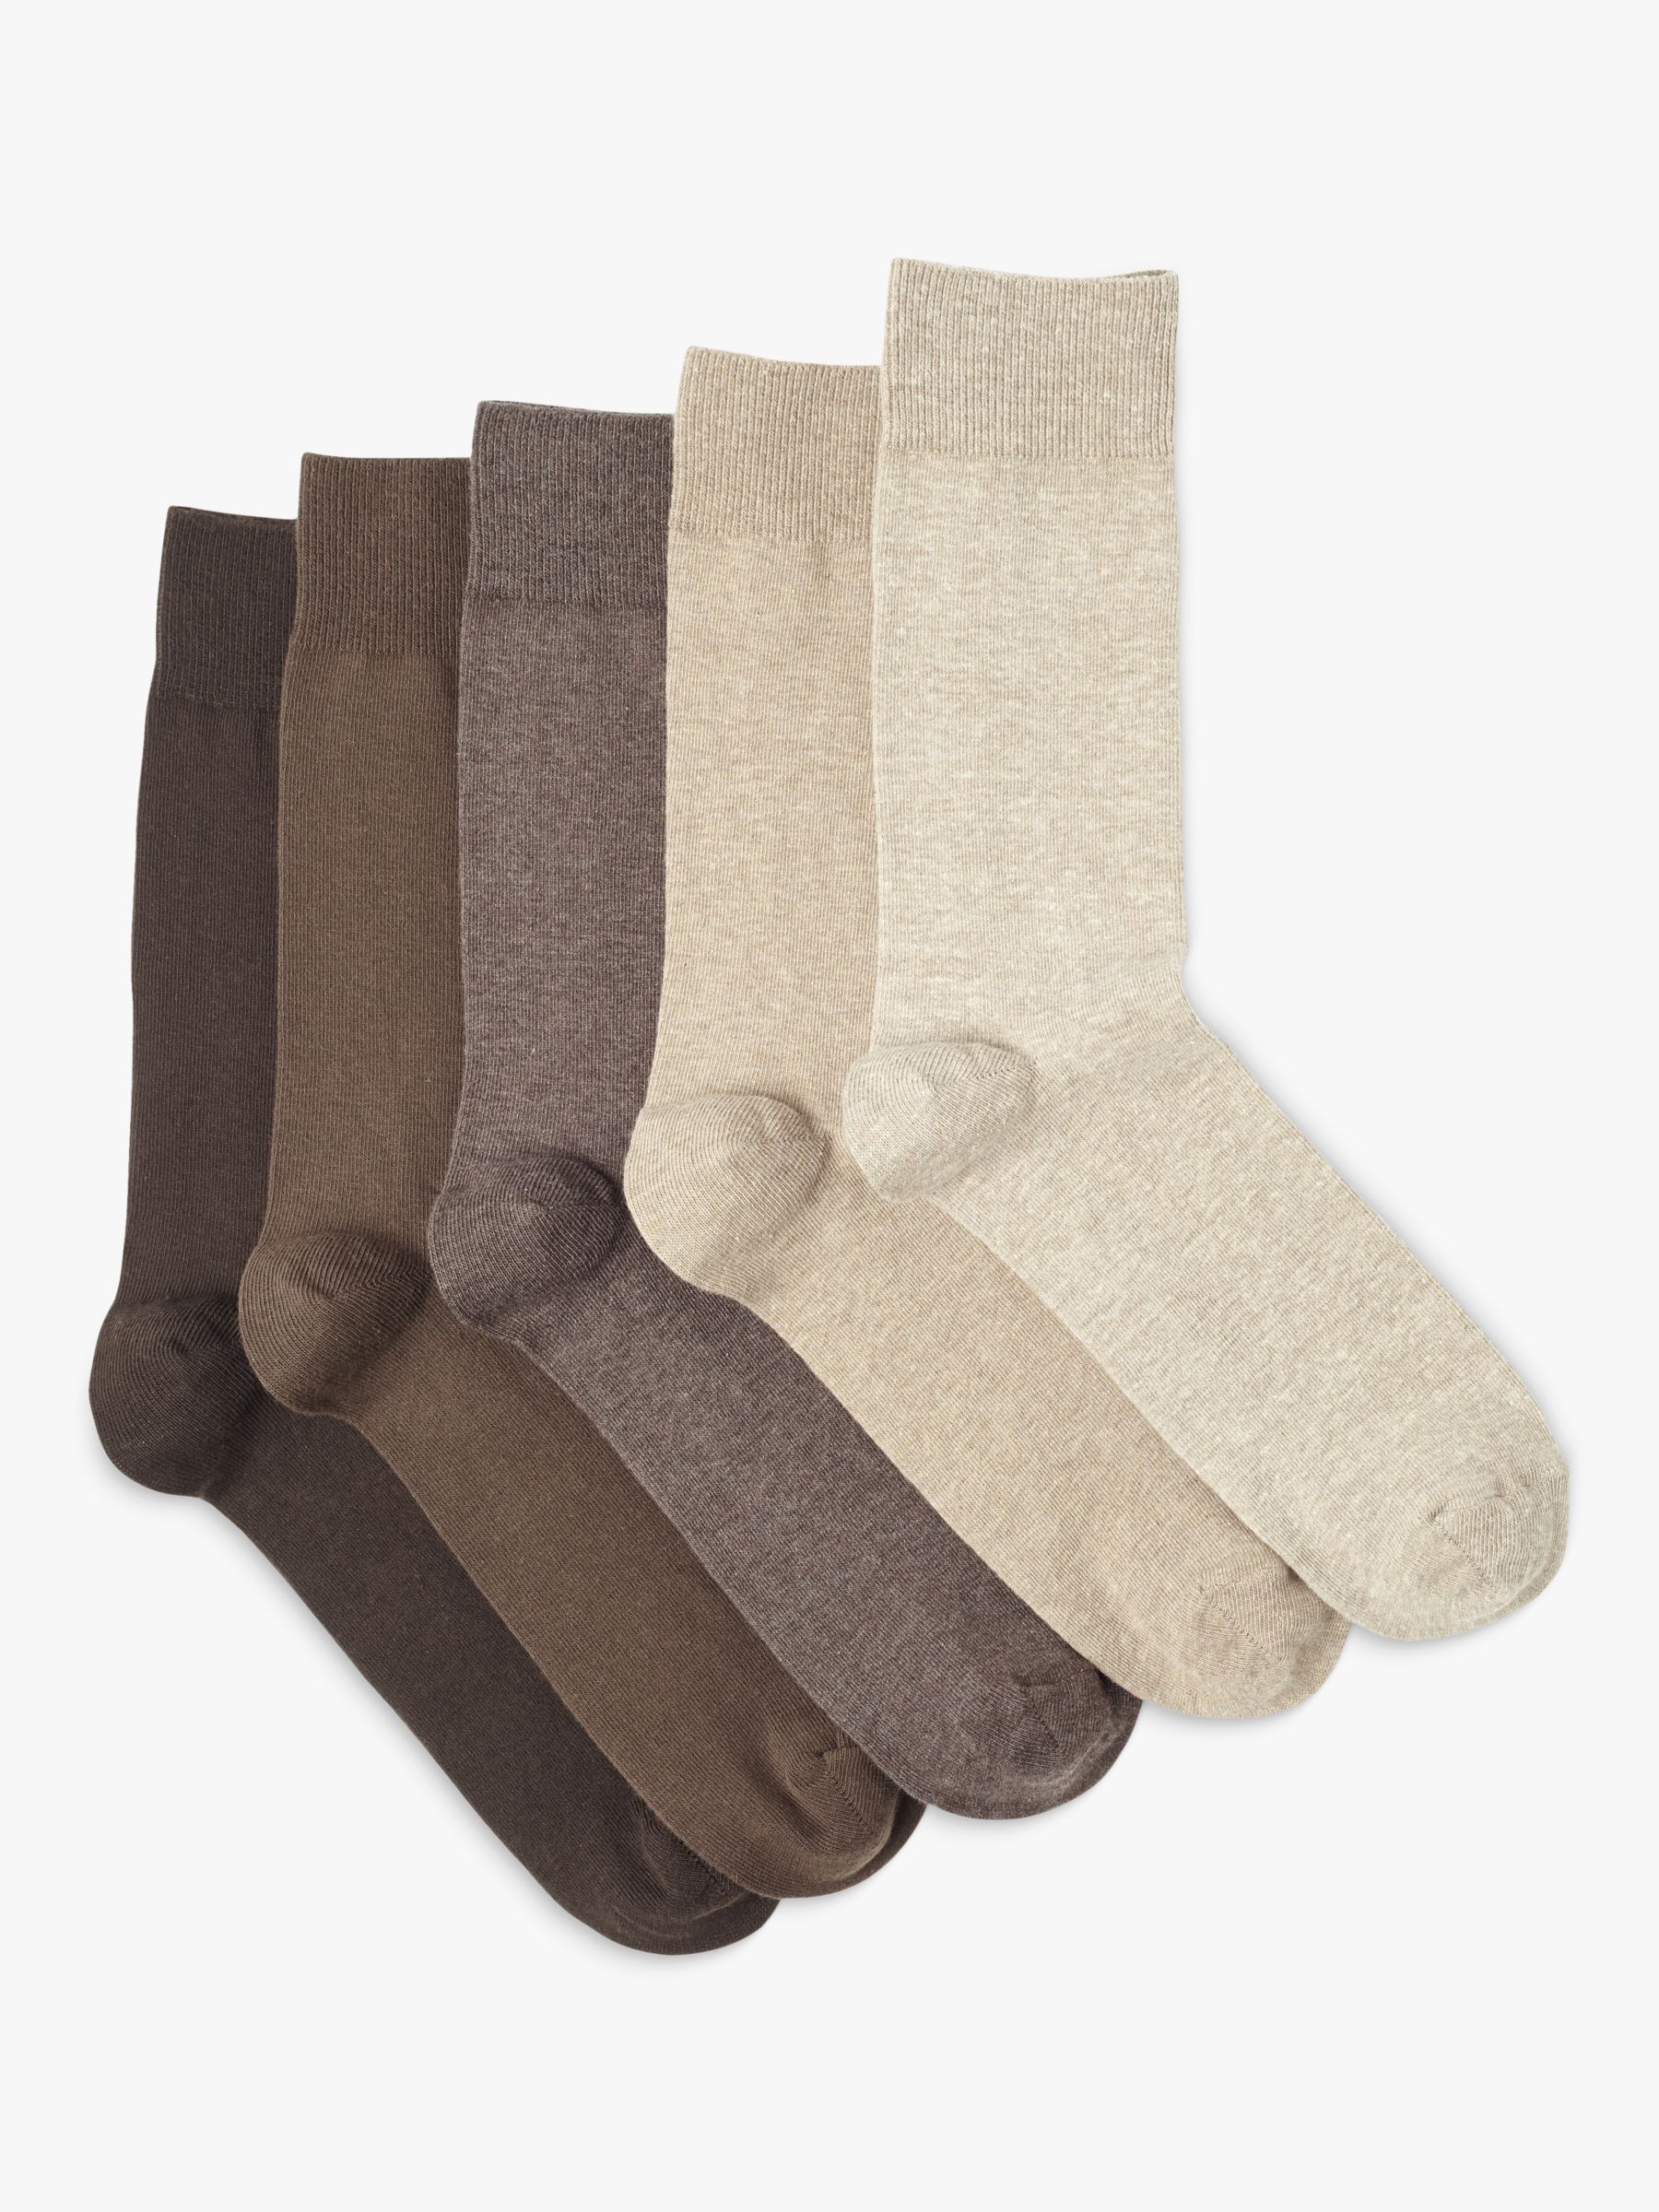 John Lewis & Partners Cotton Rich Socks, Pack of 5, Brown/Beige